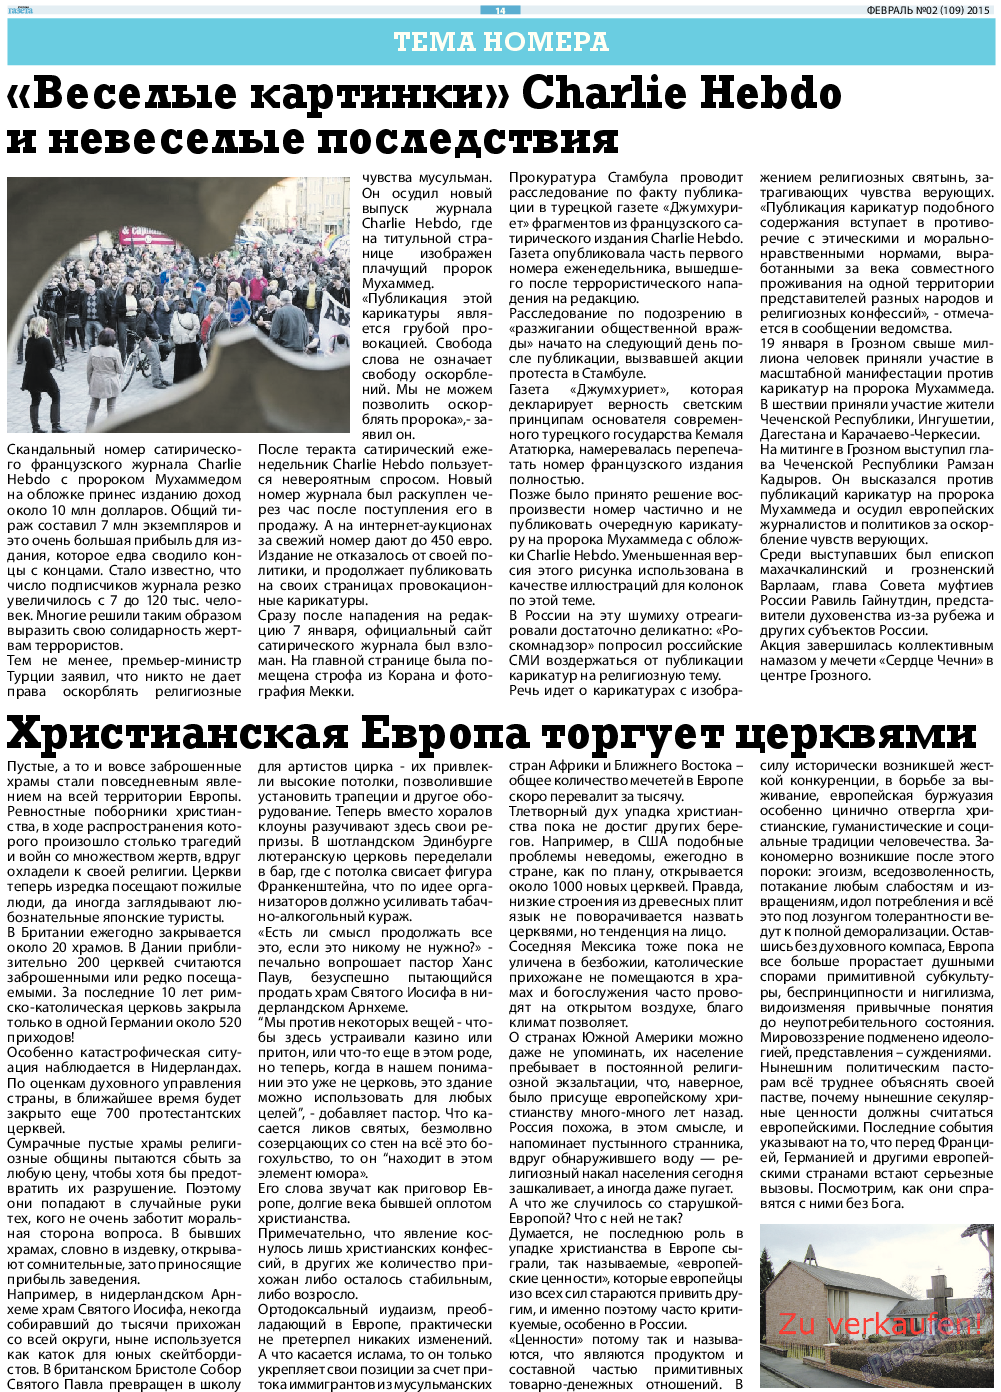 Русская Газета, газета. 2015 №2 стр.14